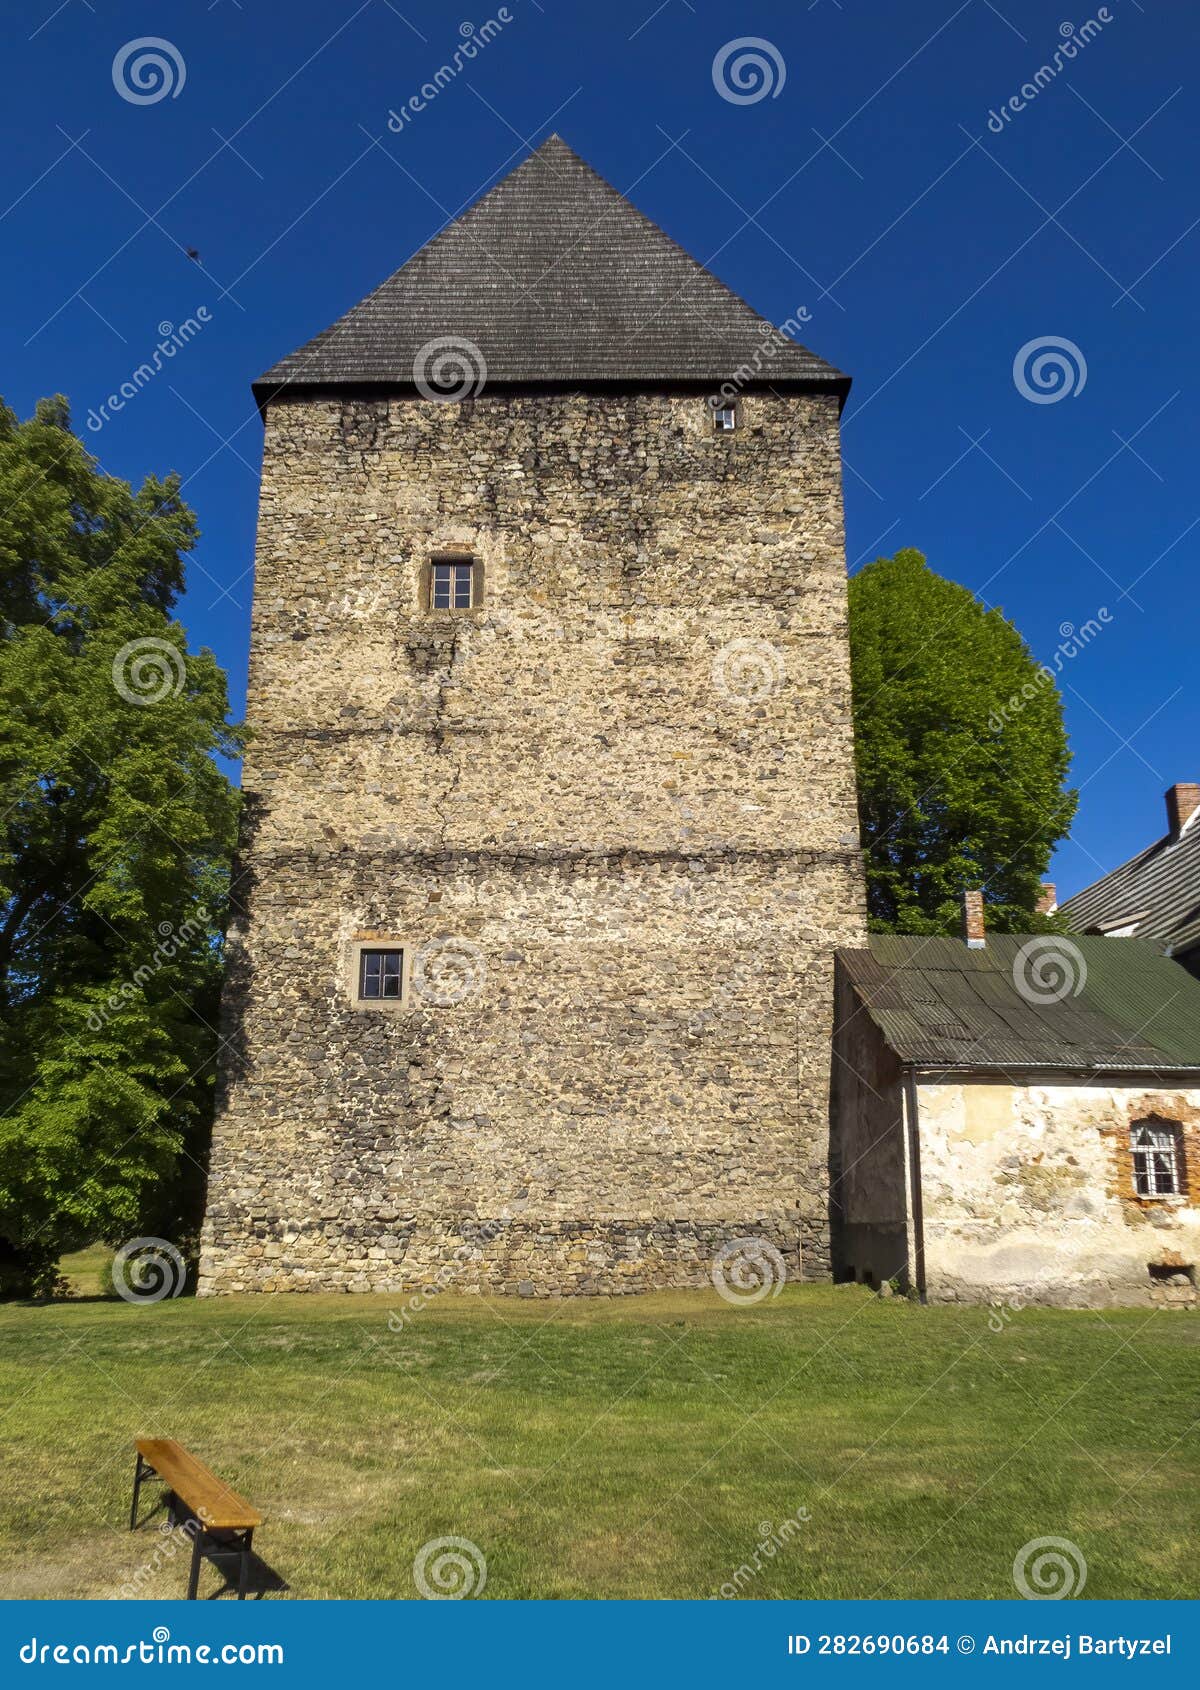 siedlecin tower in poland